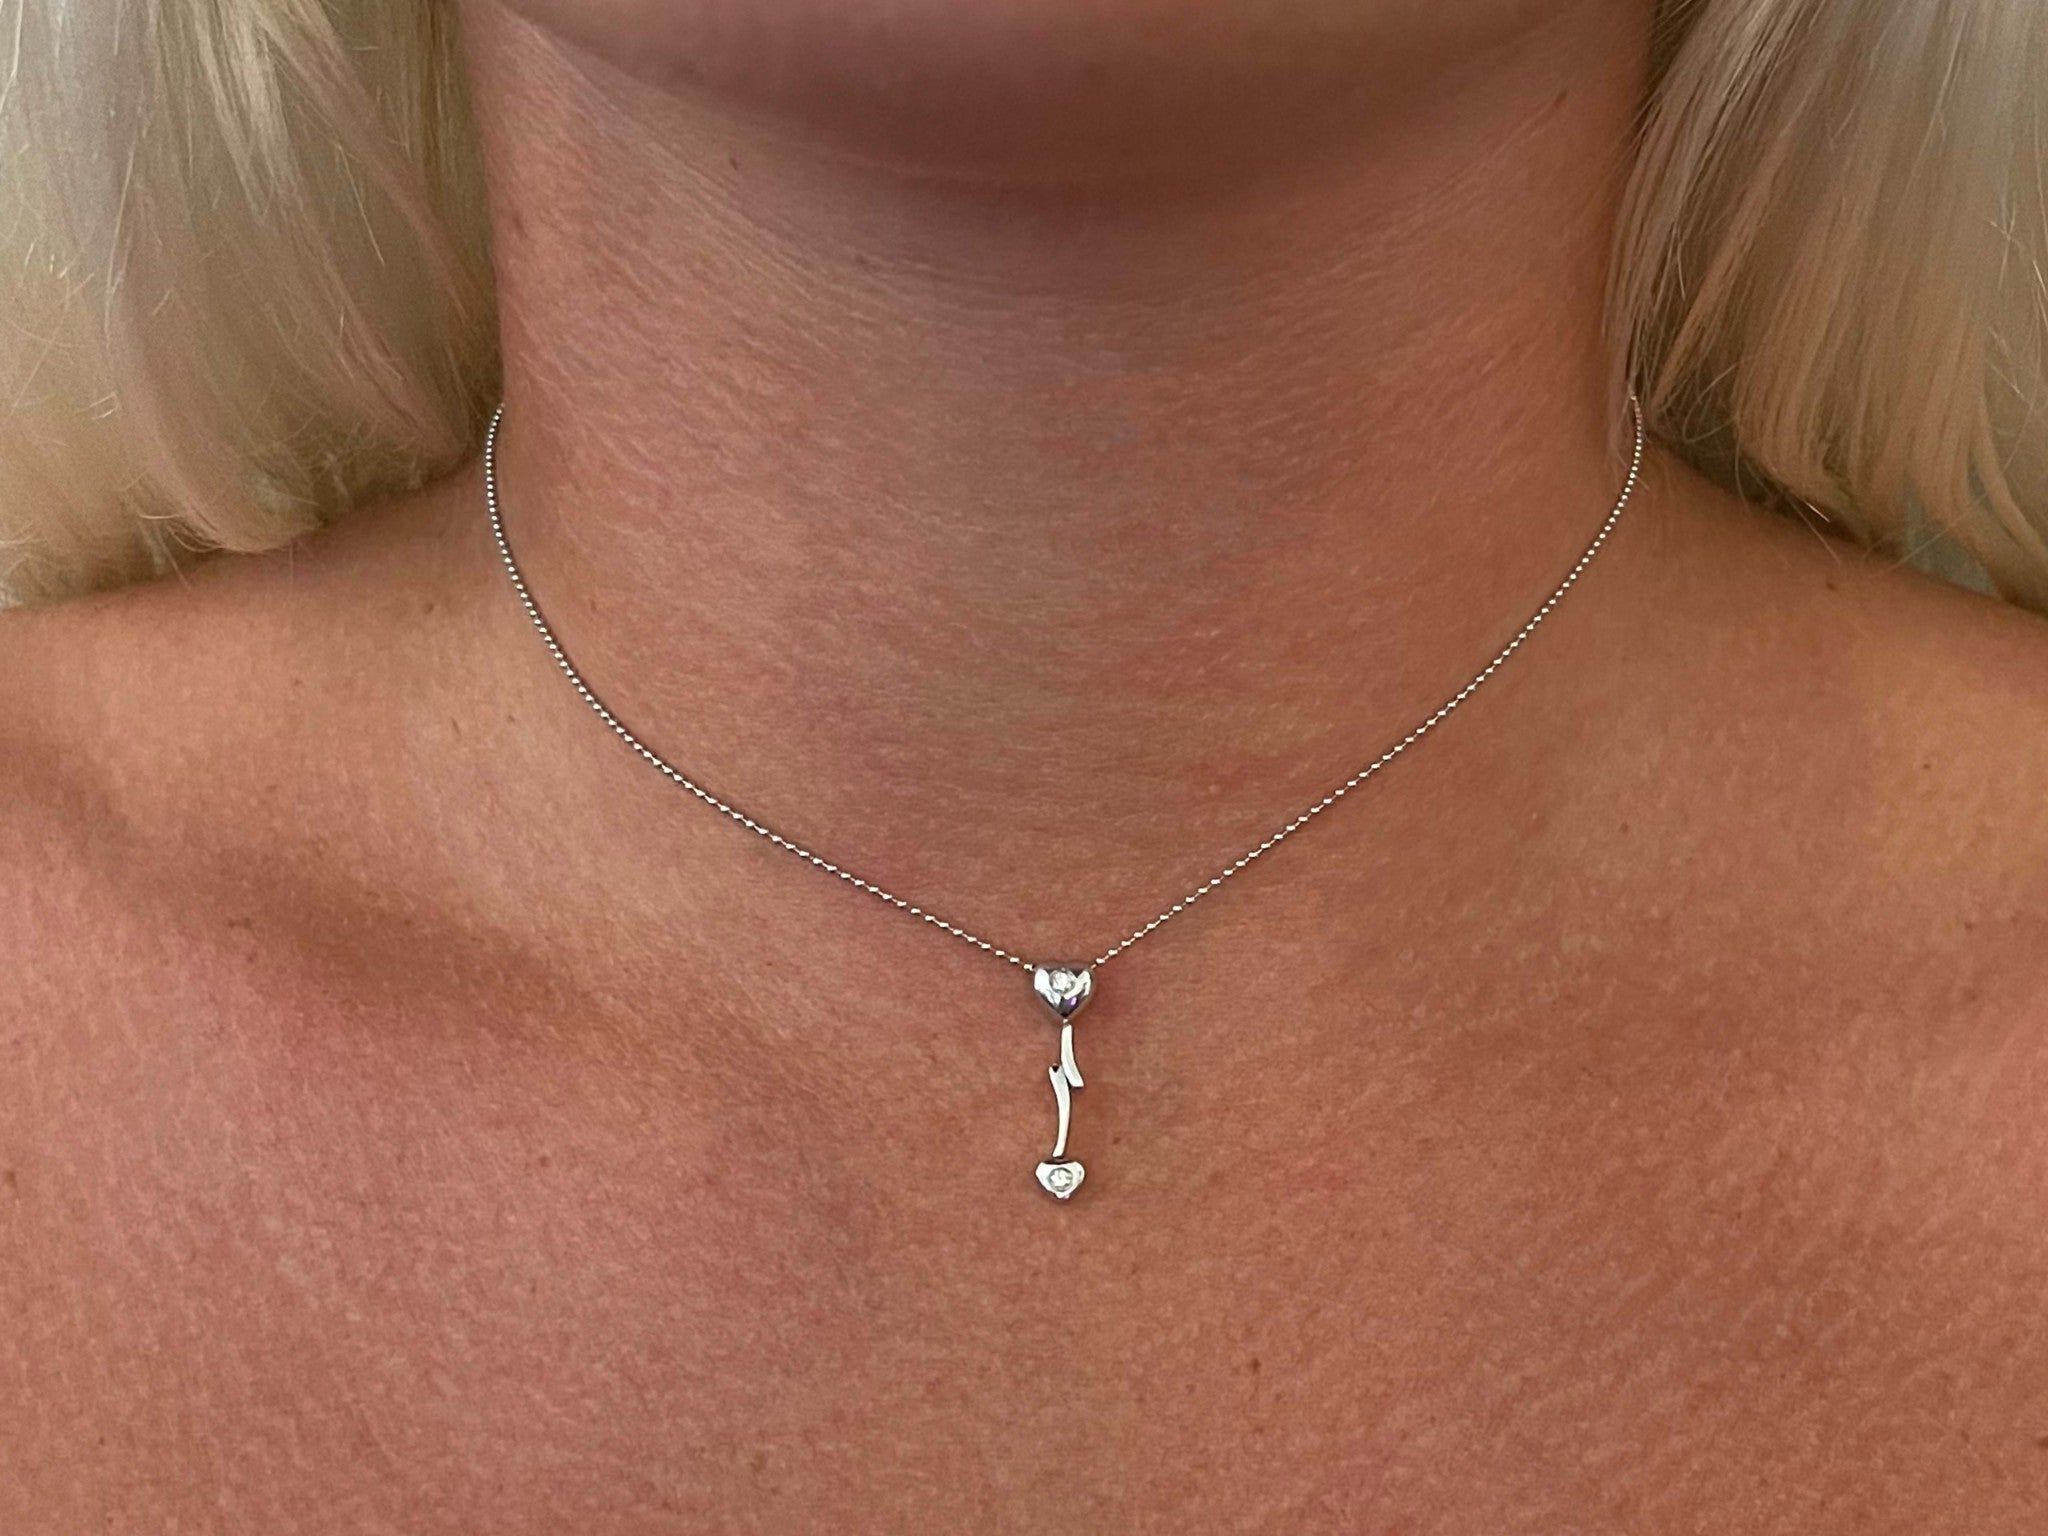 Diamond Two Heart Lightning Necklace in 14k White Gold